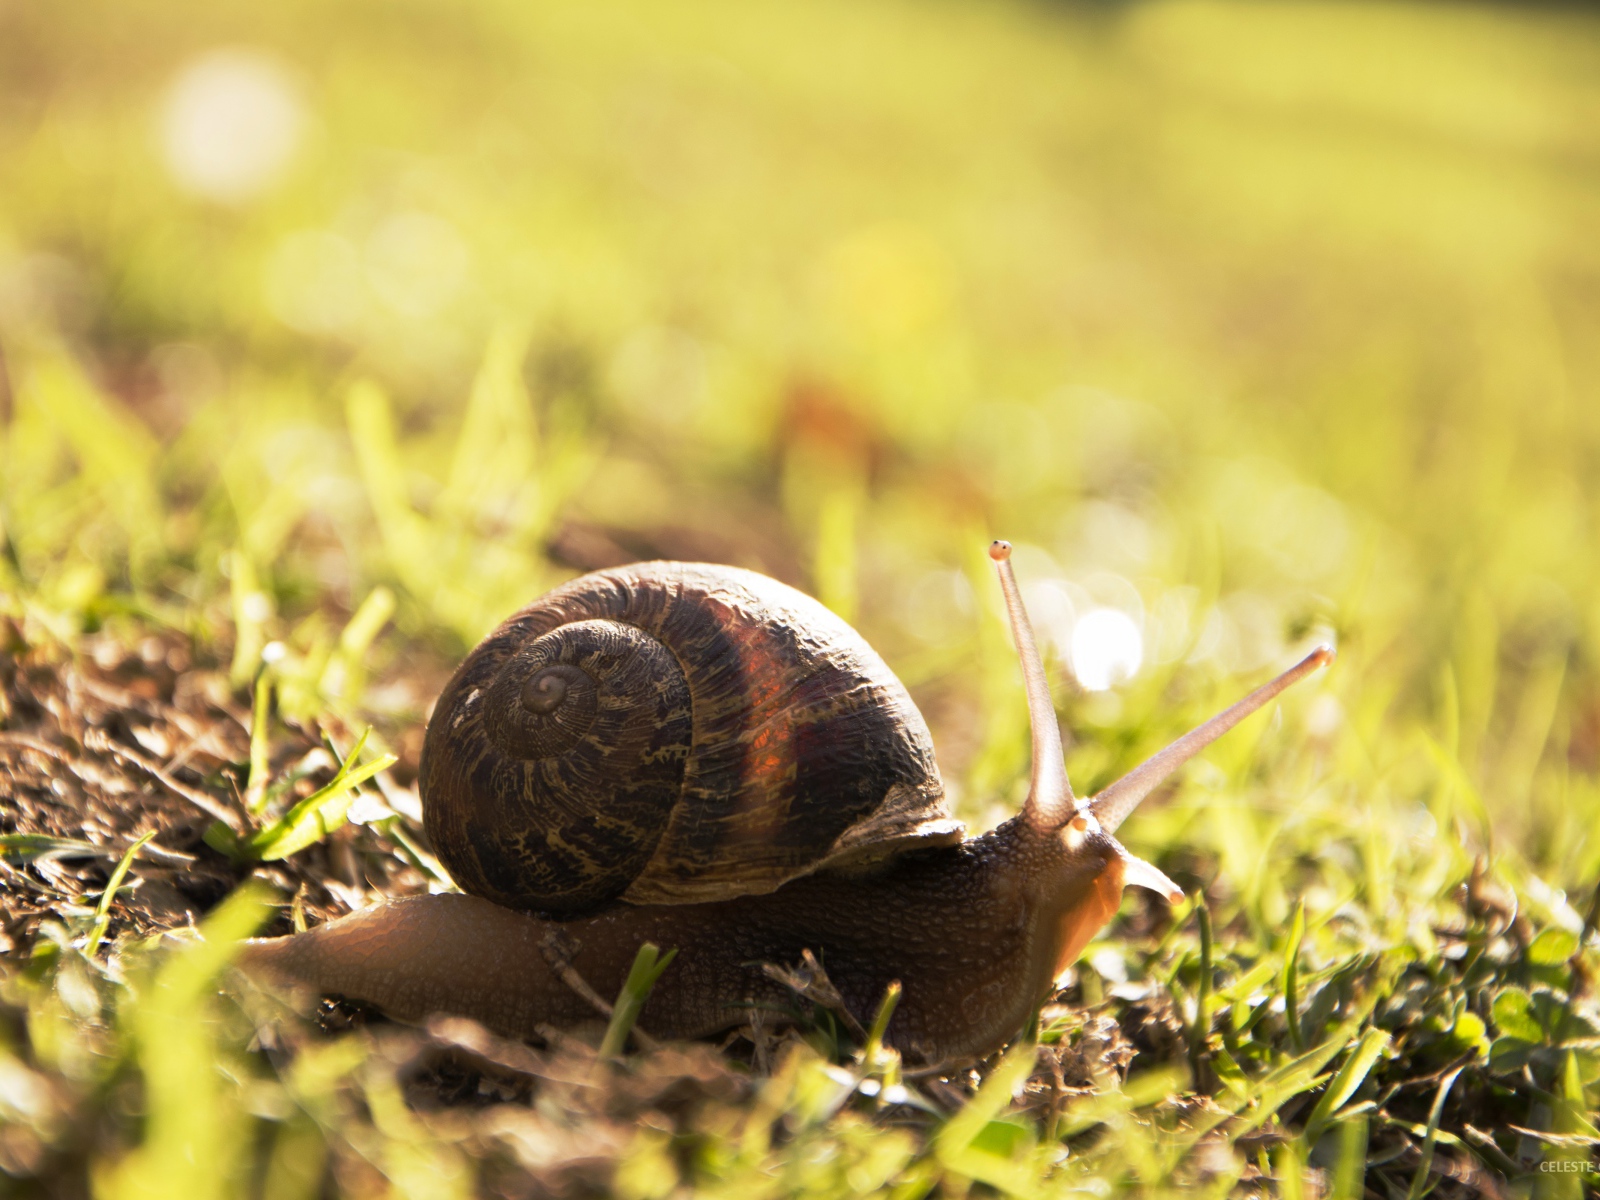 Big snail on the grass